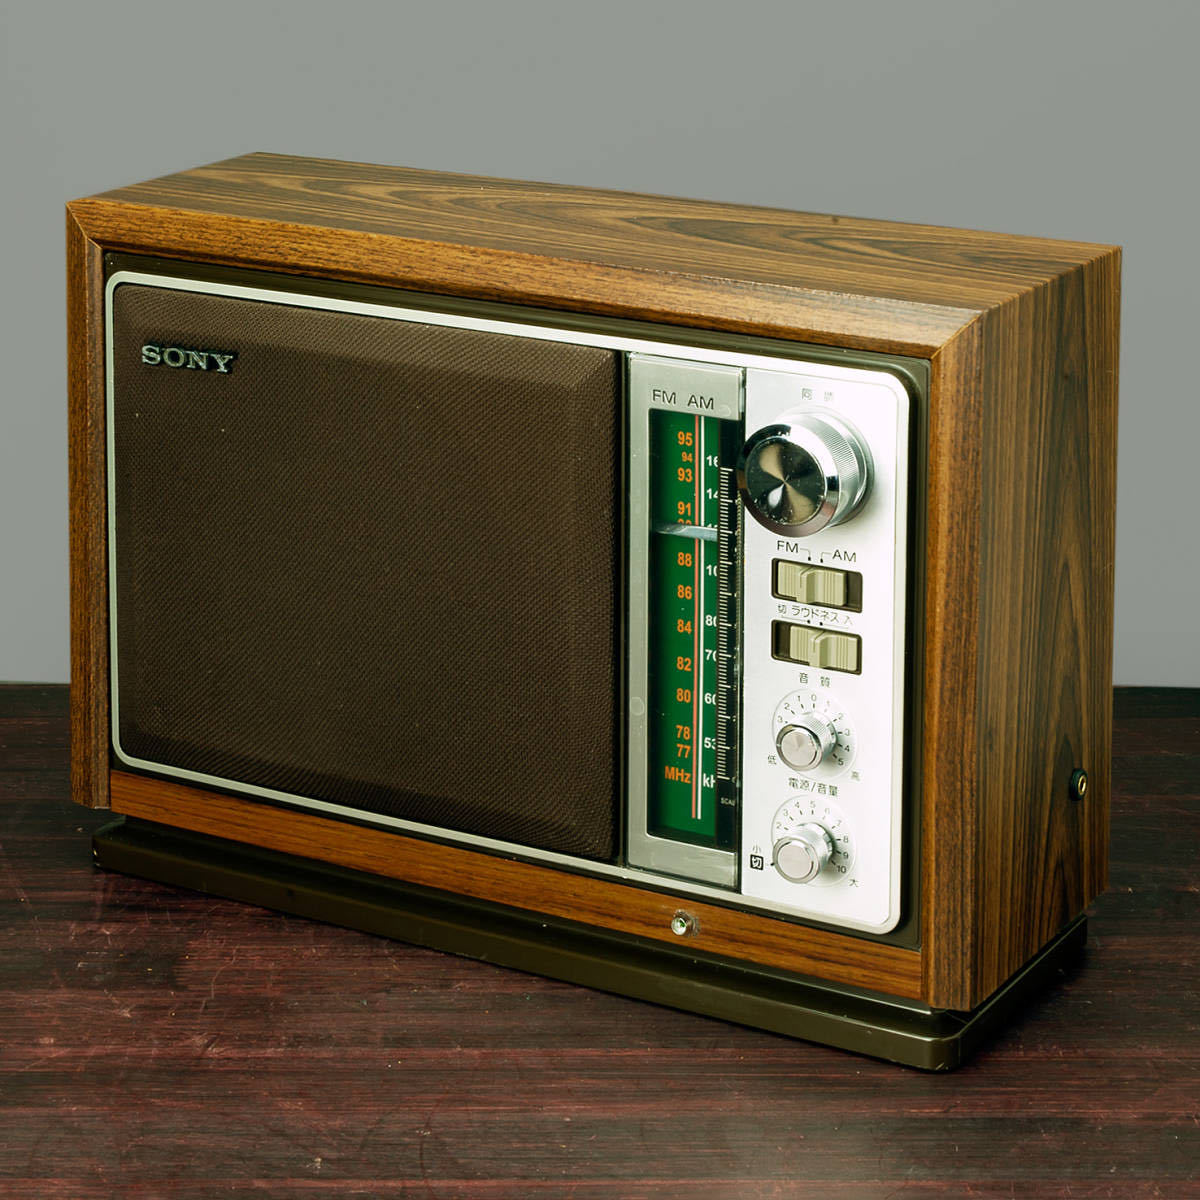 SONY トランジスターラジオ ICF-9740 AM/FM2BAND FMは95MHzまで受信OK！インテリア性抜群の修正修復整備品 _画像3